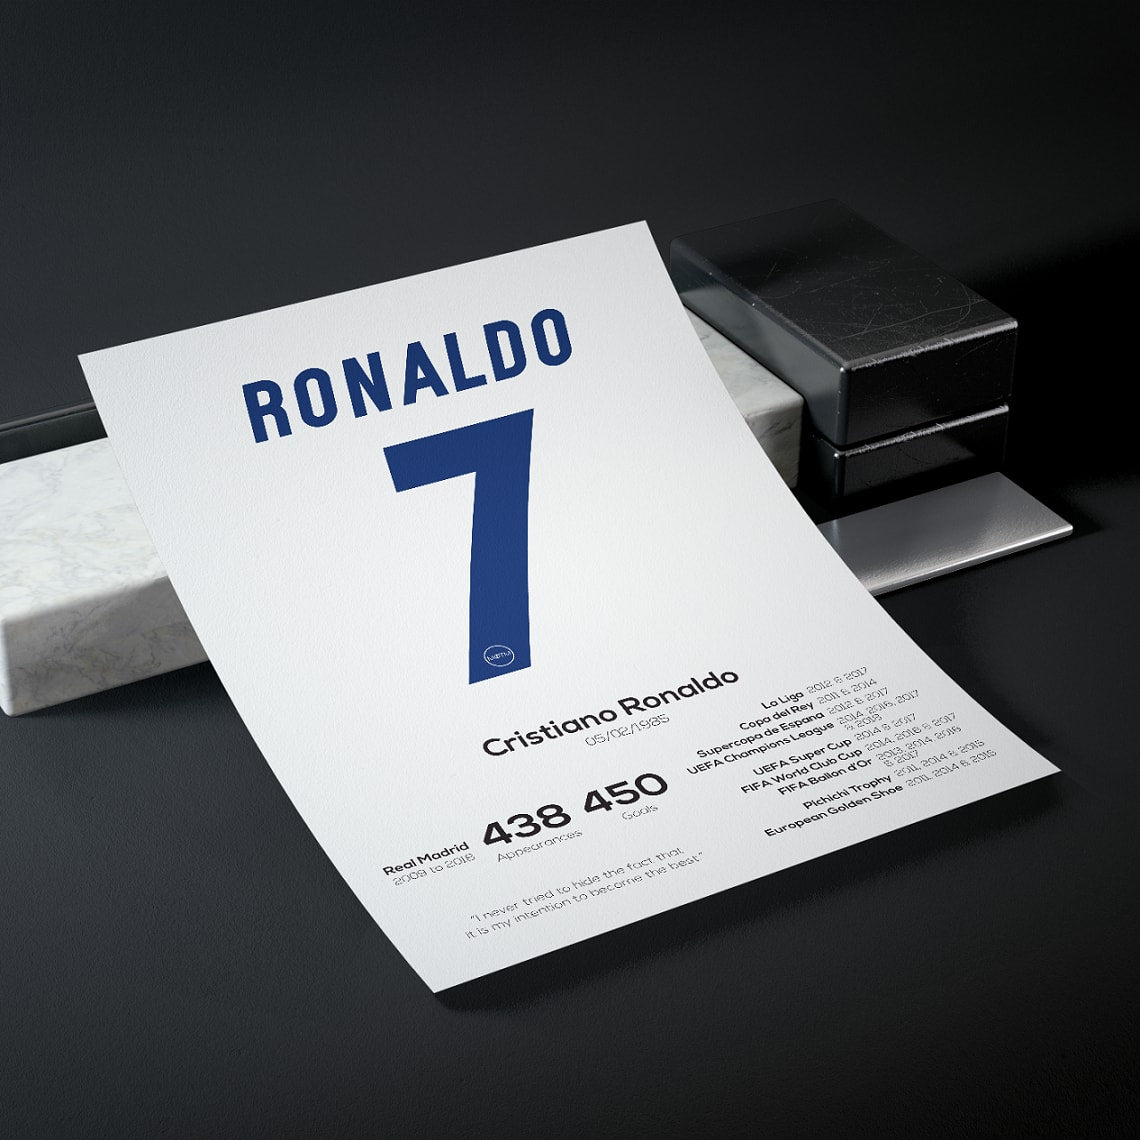 Cristiano Ronaldo, Champions League, Madrid, Spain print by